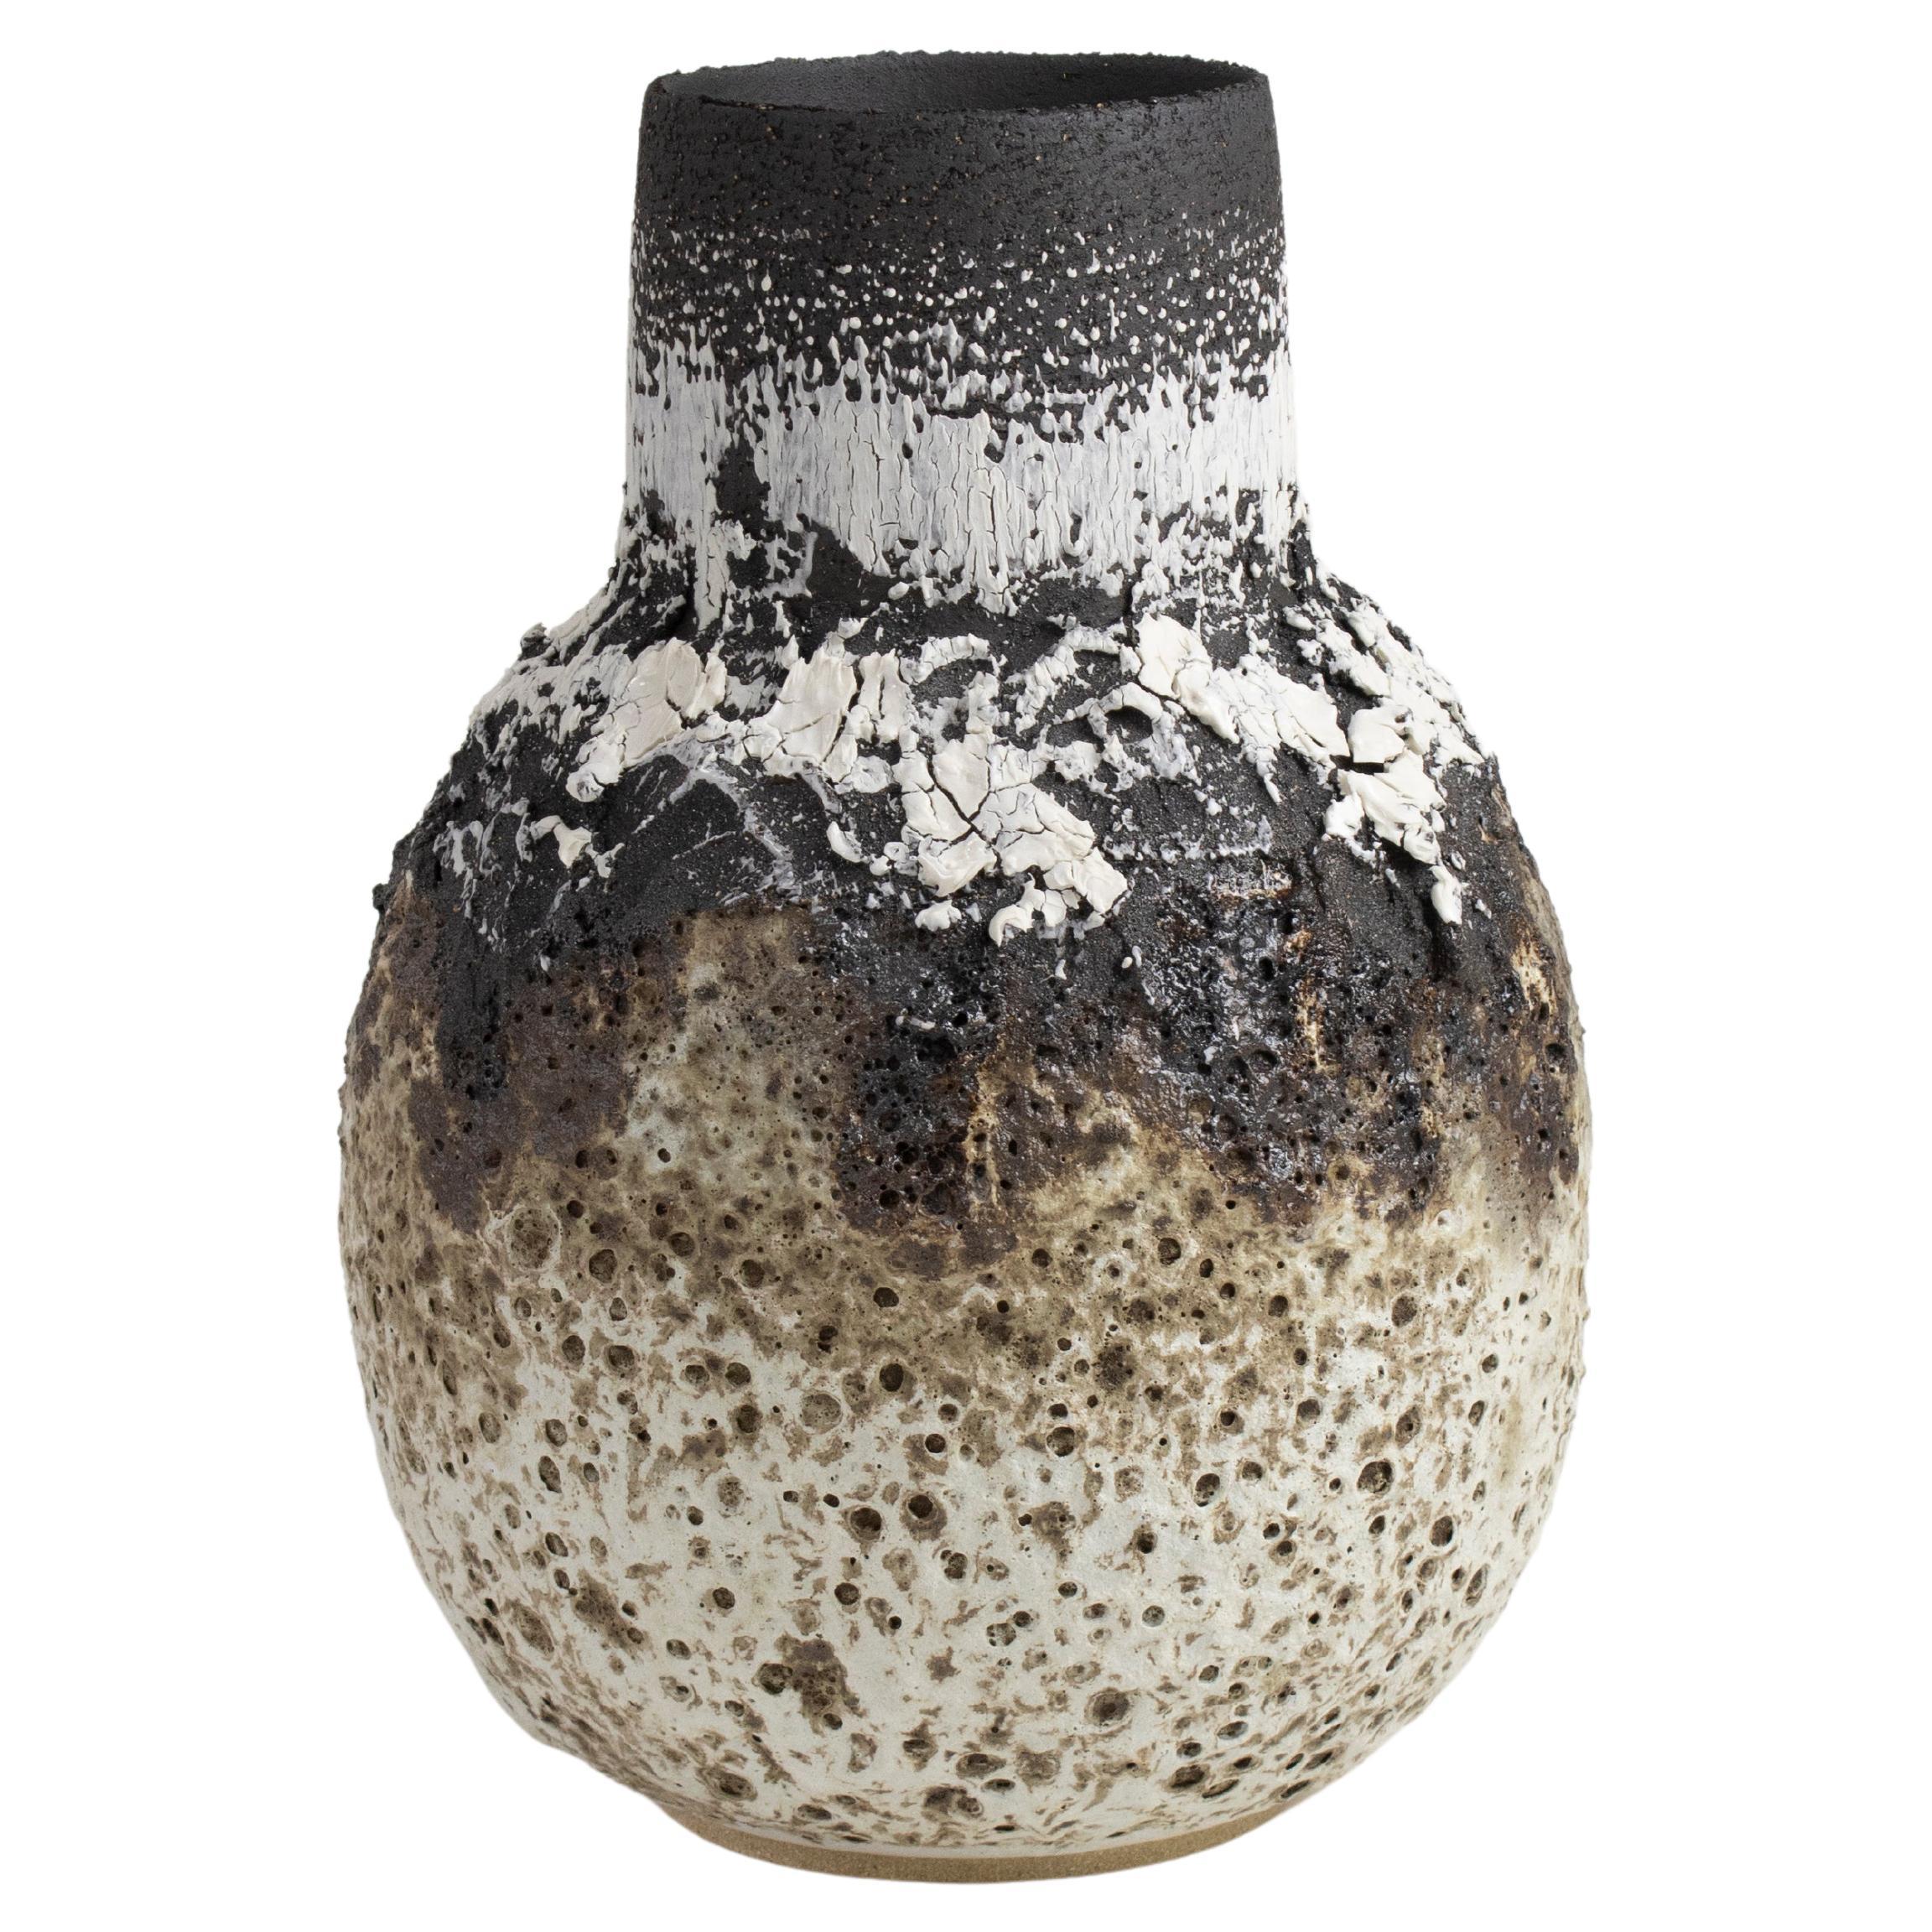 Handmade Ceramic Vessel Unique Ceramic Vase Home Decor White Ceramics Volcanic Lace Glaze One of a Kind Piece